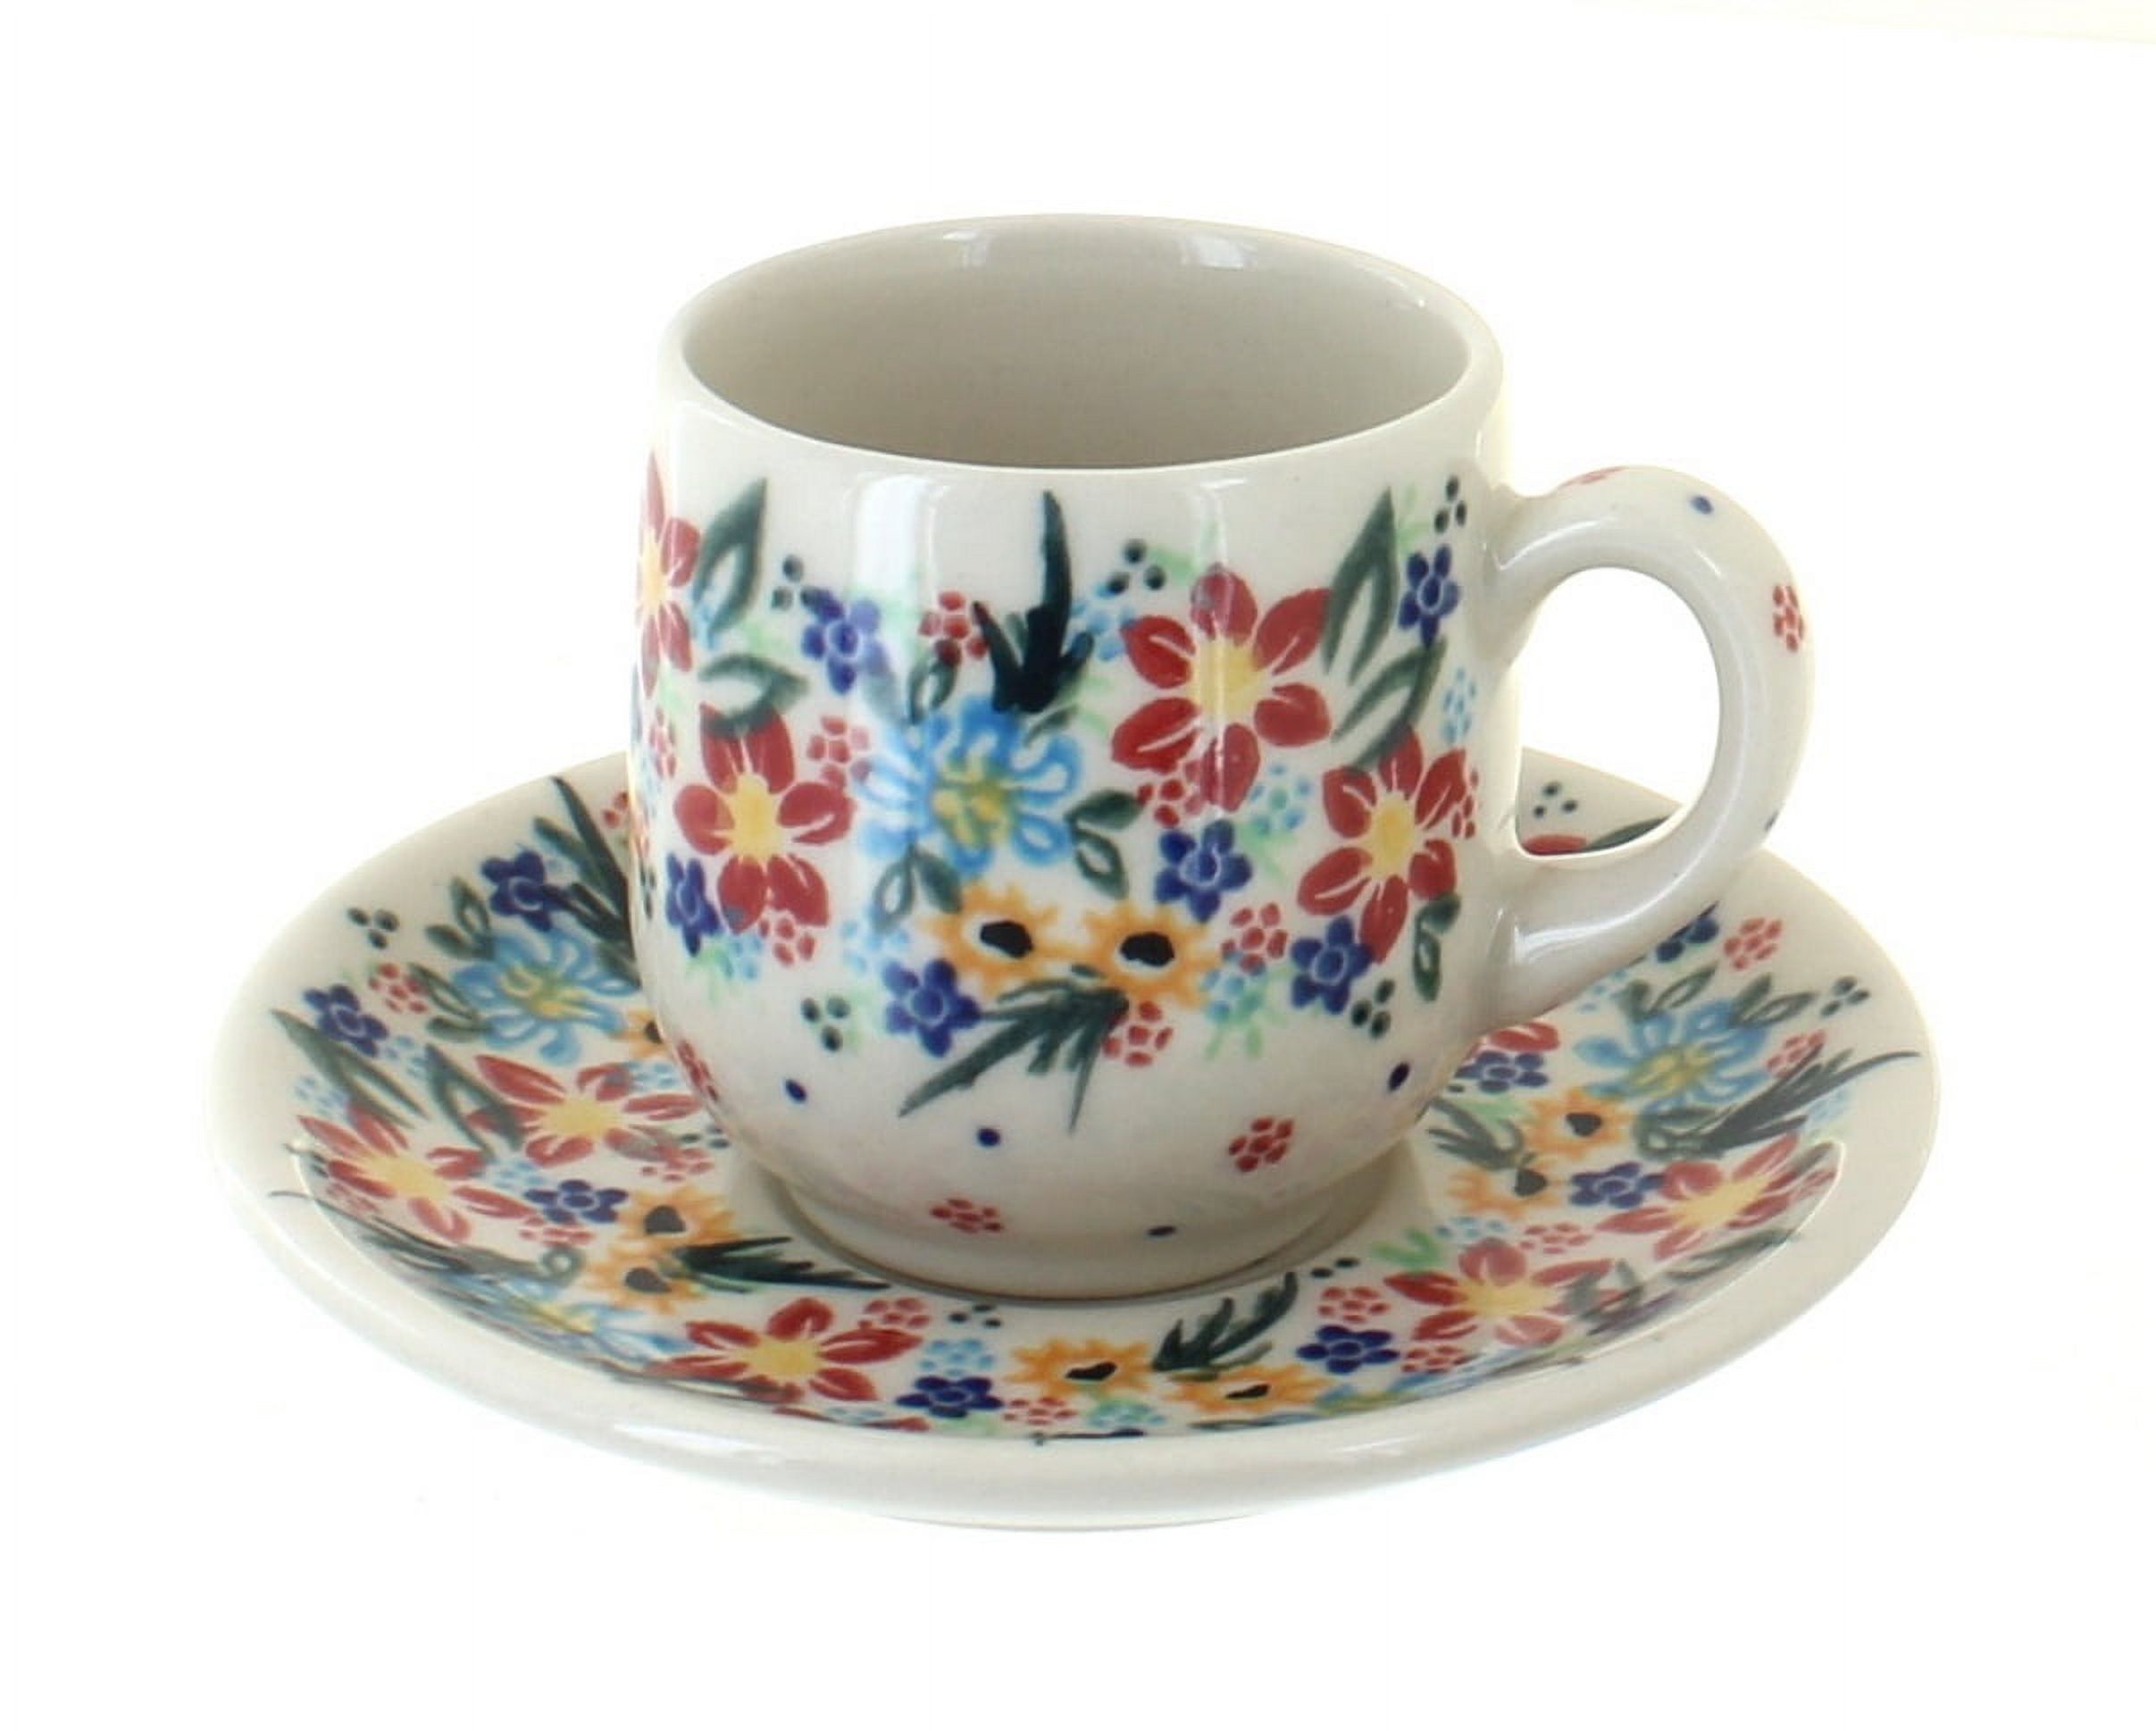 Blue Rose Polish Pottery Tara Espresso Cup & Saucer - image 1 of 2